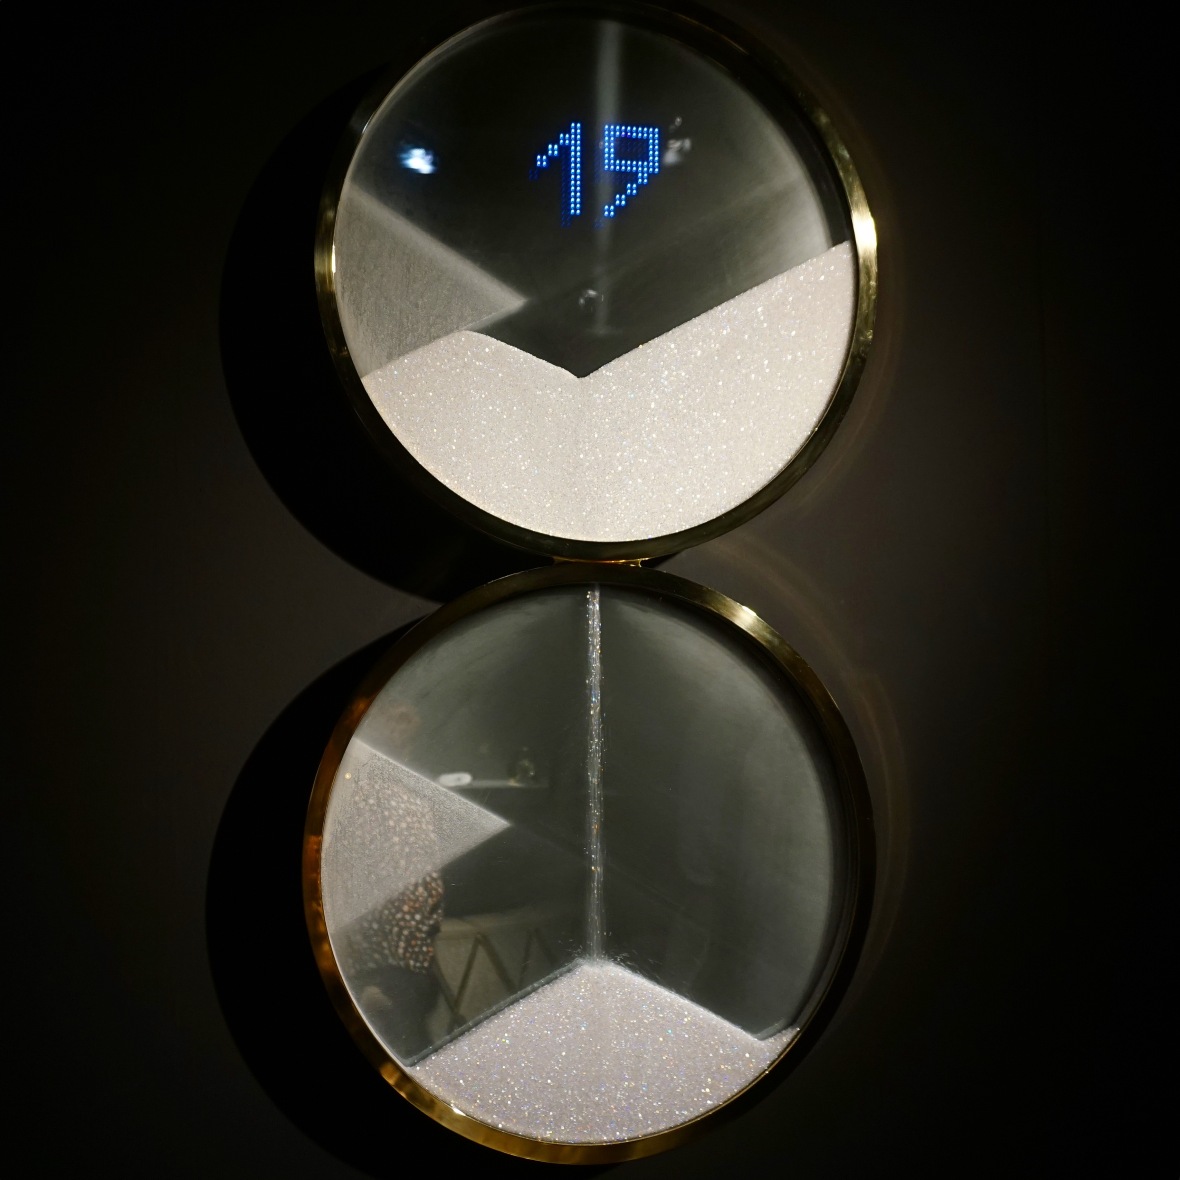 A timepiece by Swarovski Designers of the Future Award 2015 winners Studio Swine, featuring 